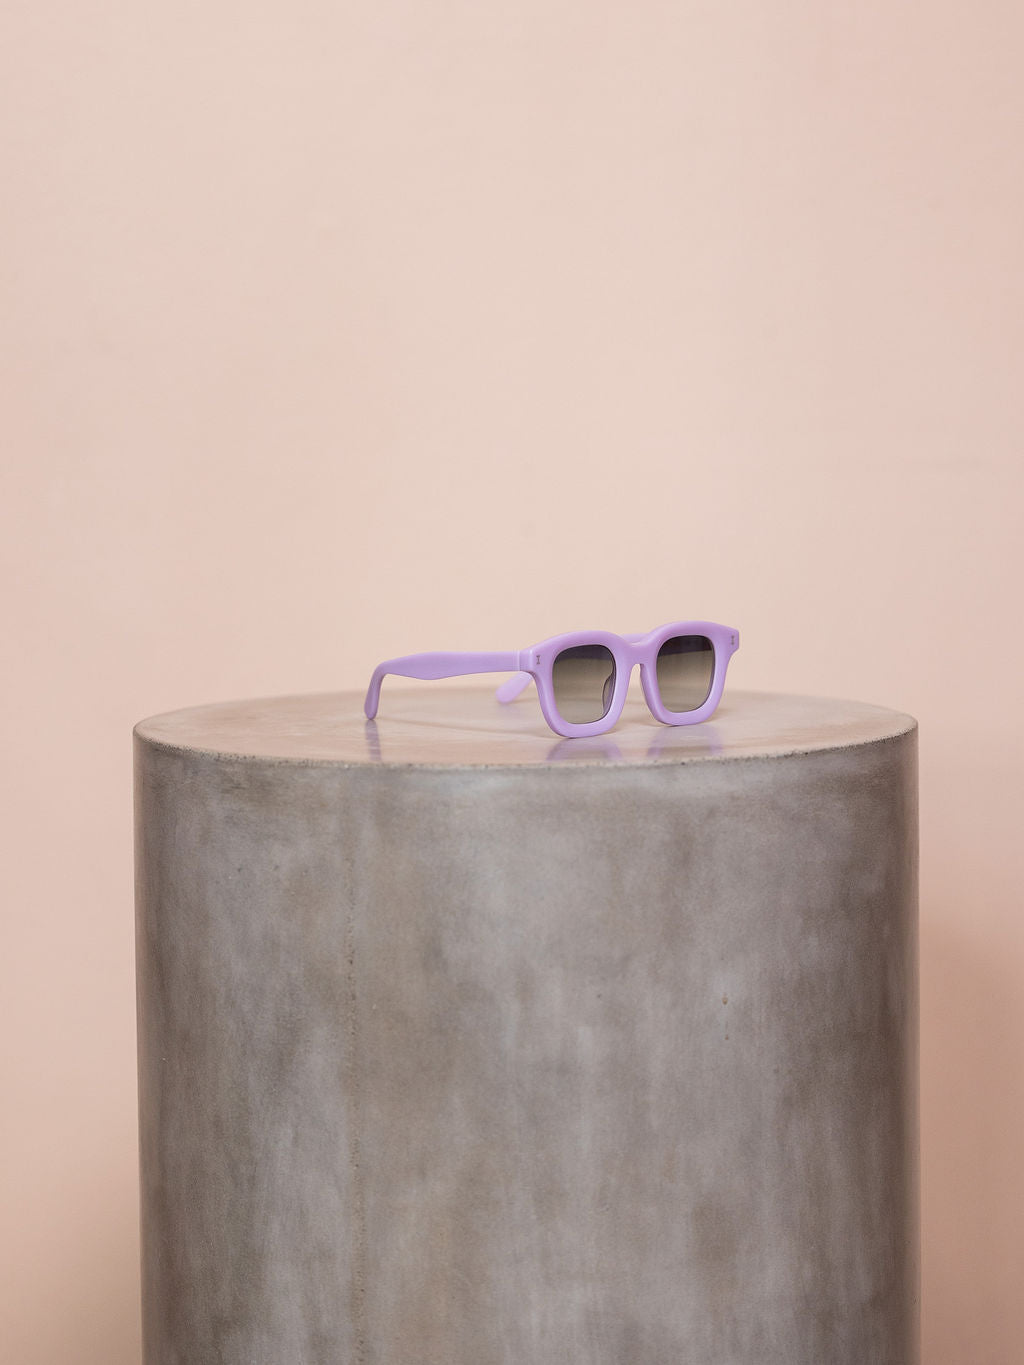 Purple sunglasses on a podium against pink background